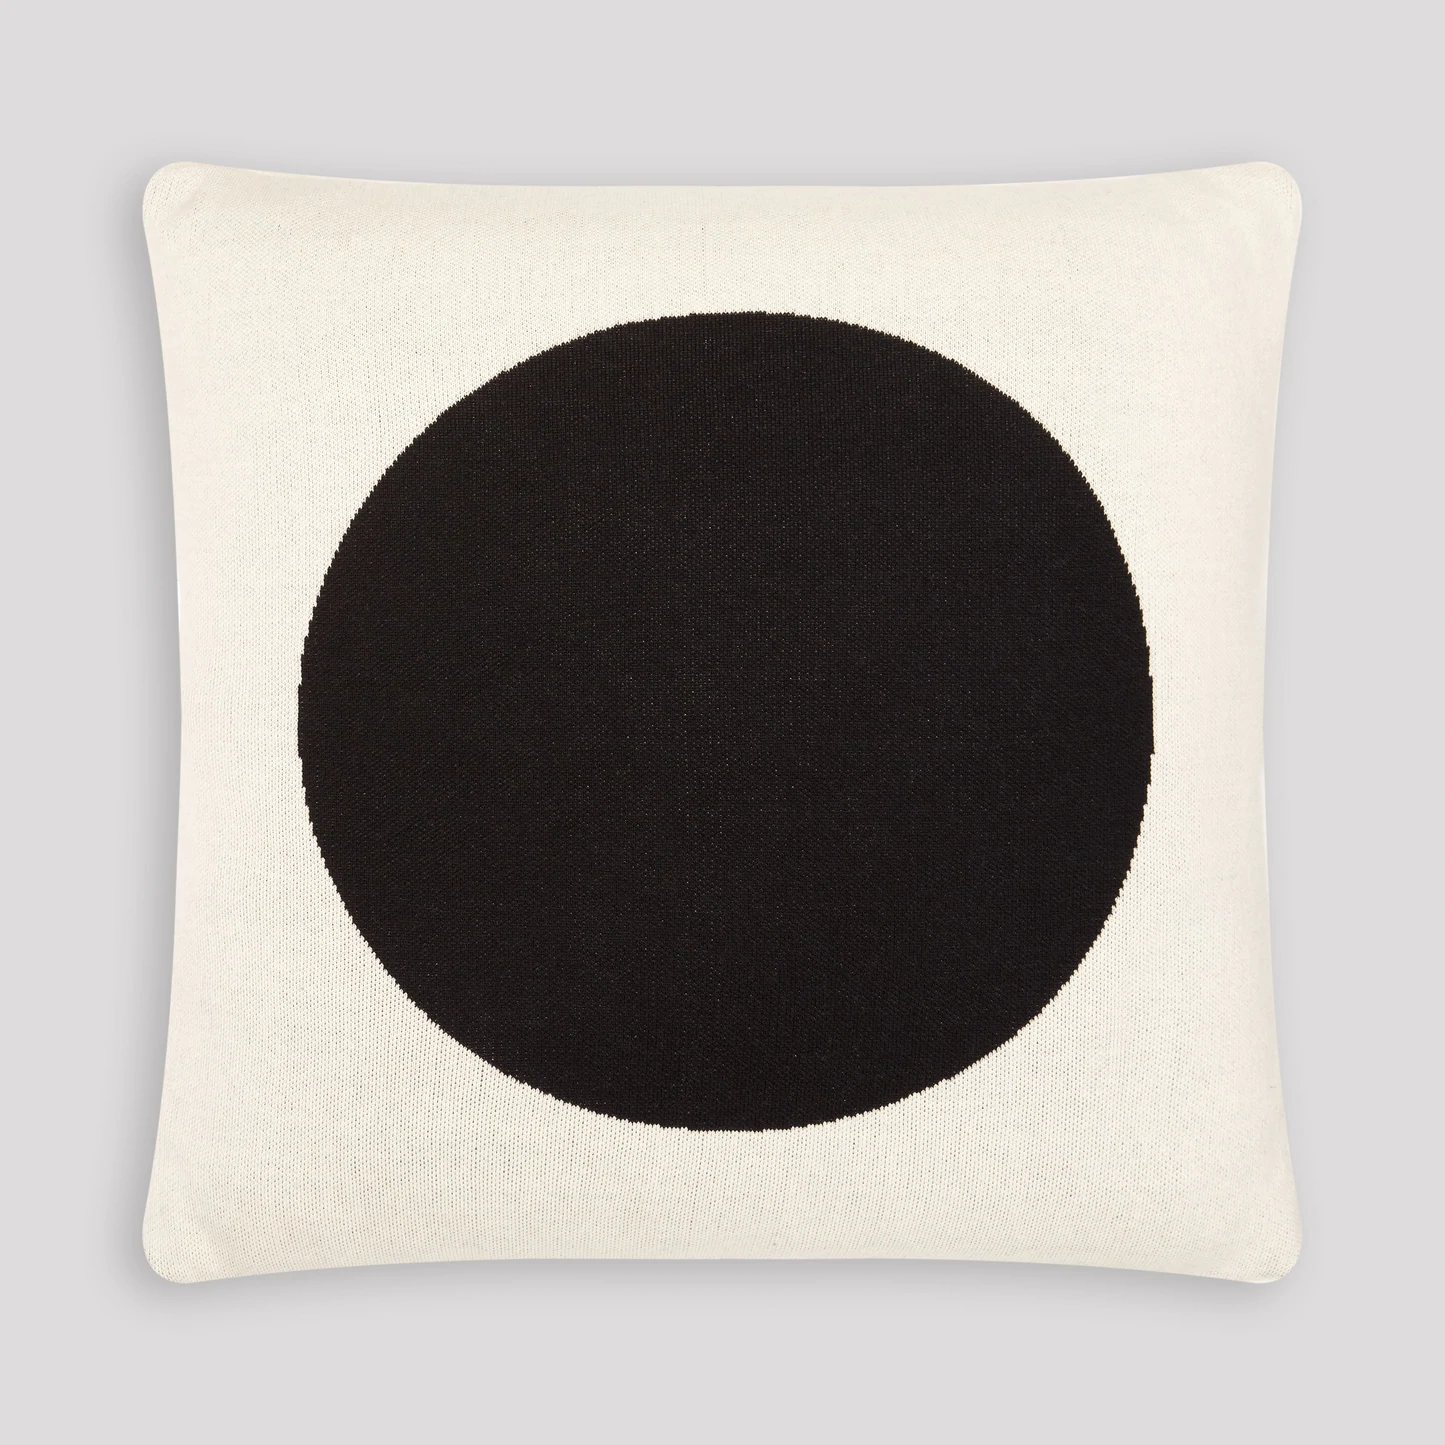 Sophie Home Runda Knitted Cushion Cover : Black 50 x 50 cm